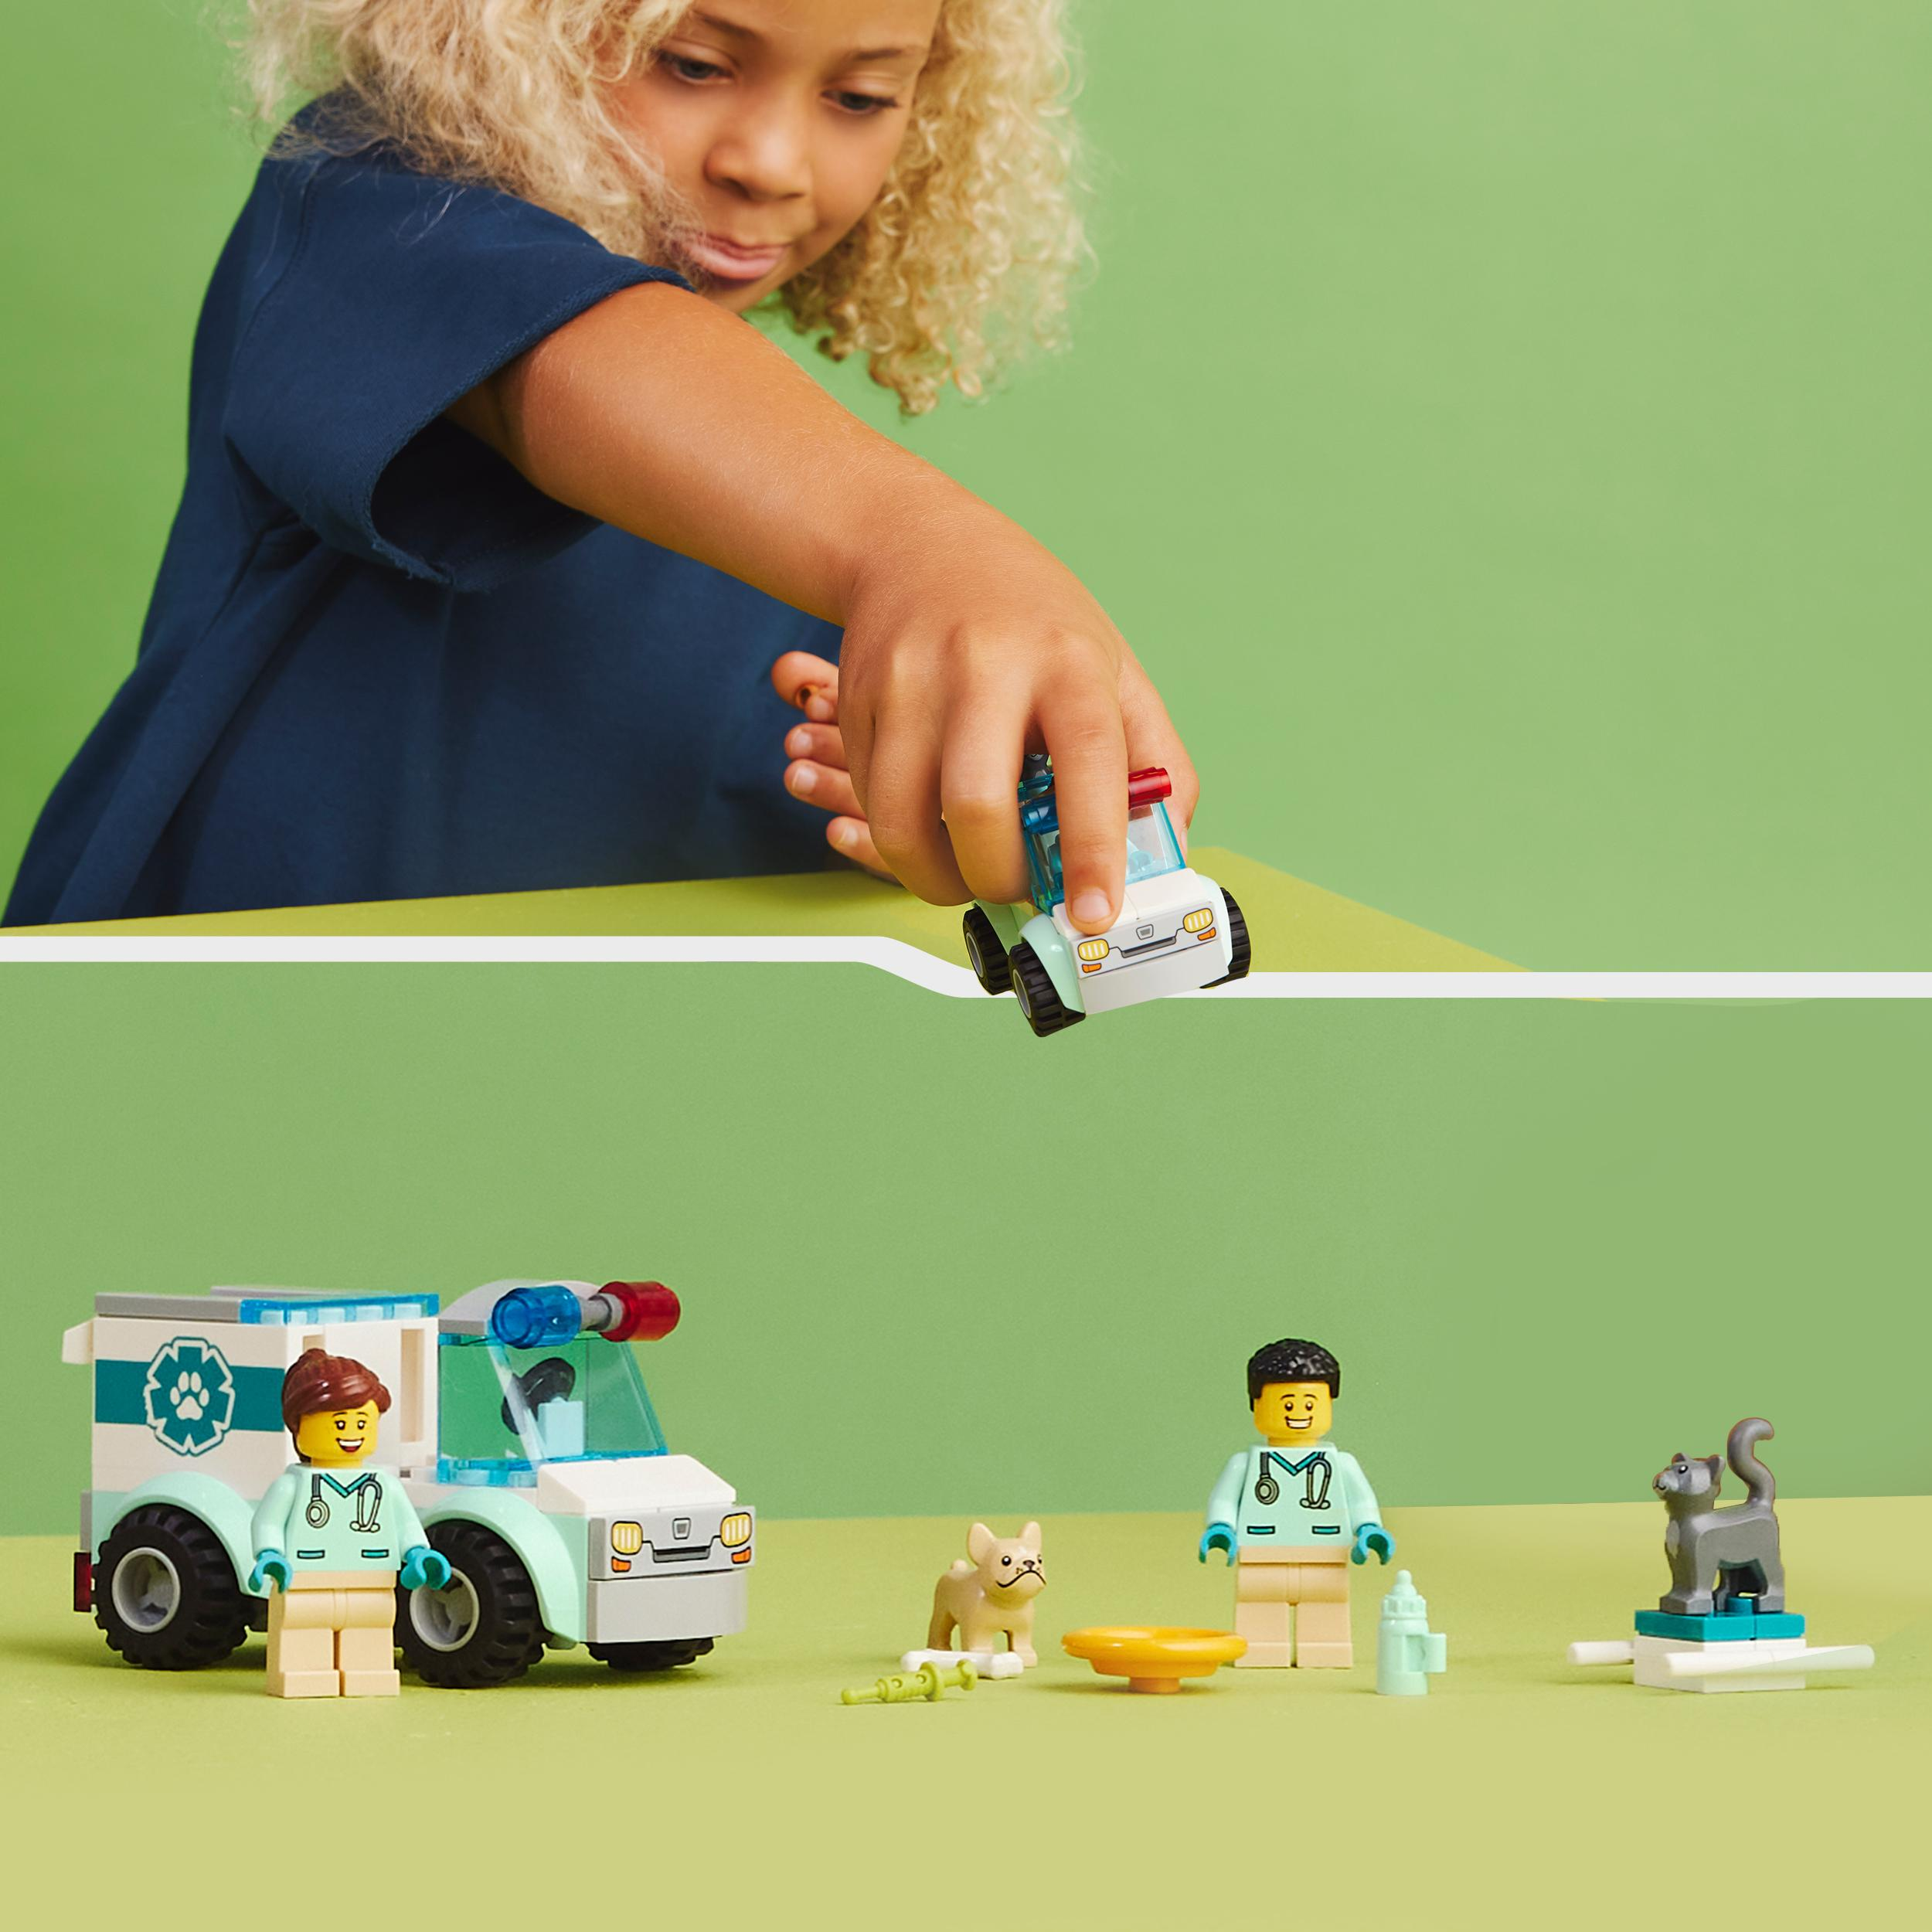 Bausatz, LEGO 60382 Mehrfarbig Tierrettungswagen City